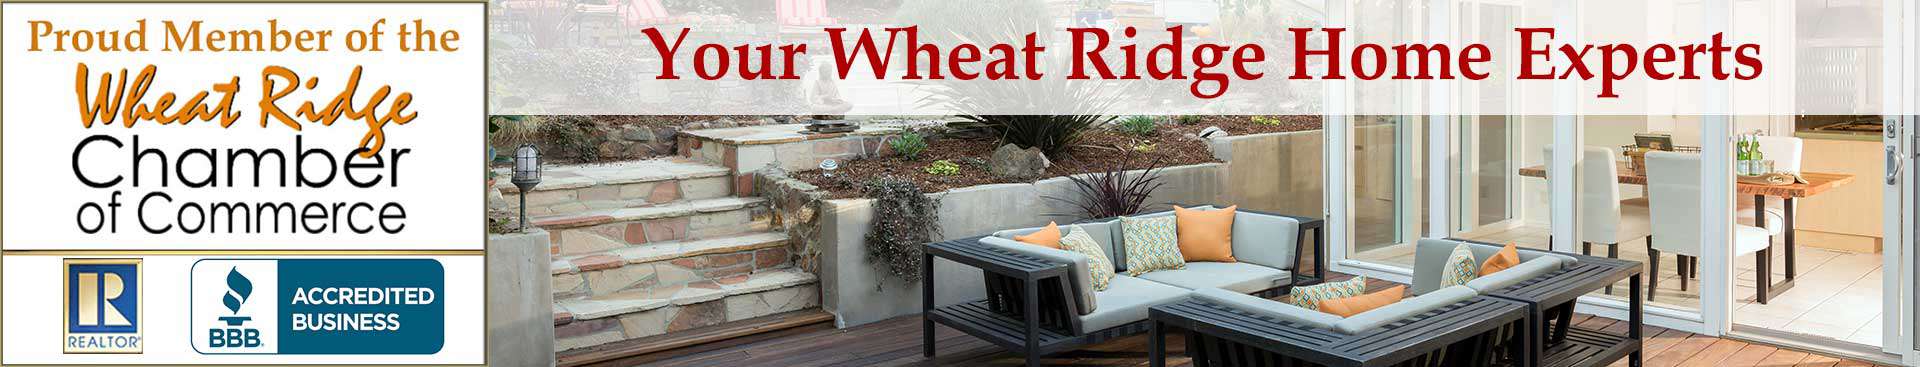 Wheat-Ridge-Banner